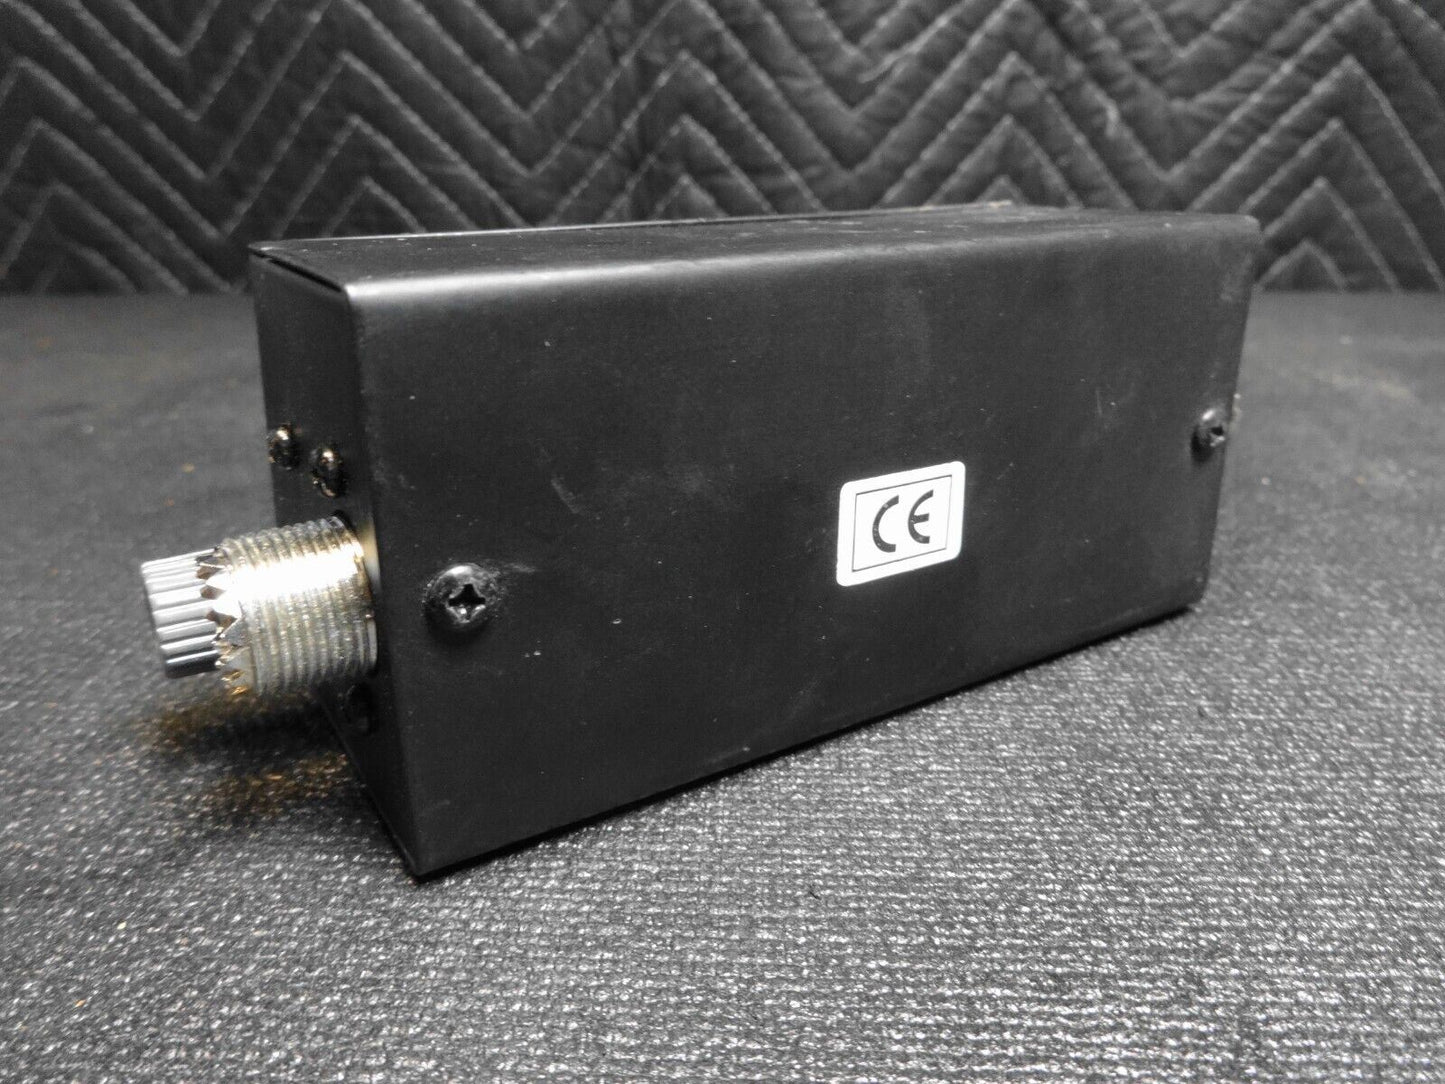 Astatic PDC2 SWR/Power/Field Strength Test Meter CB Ham Radio